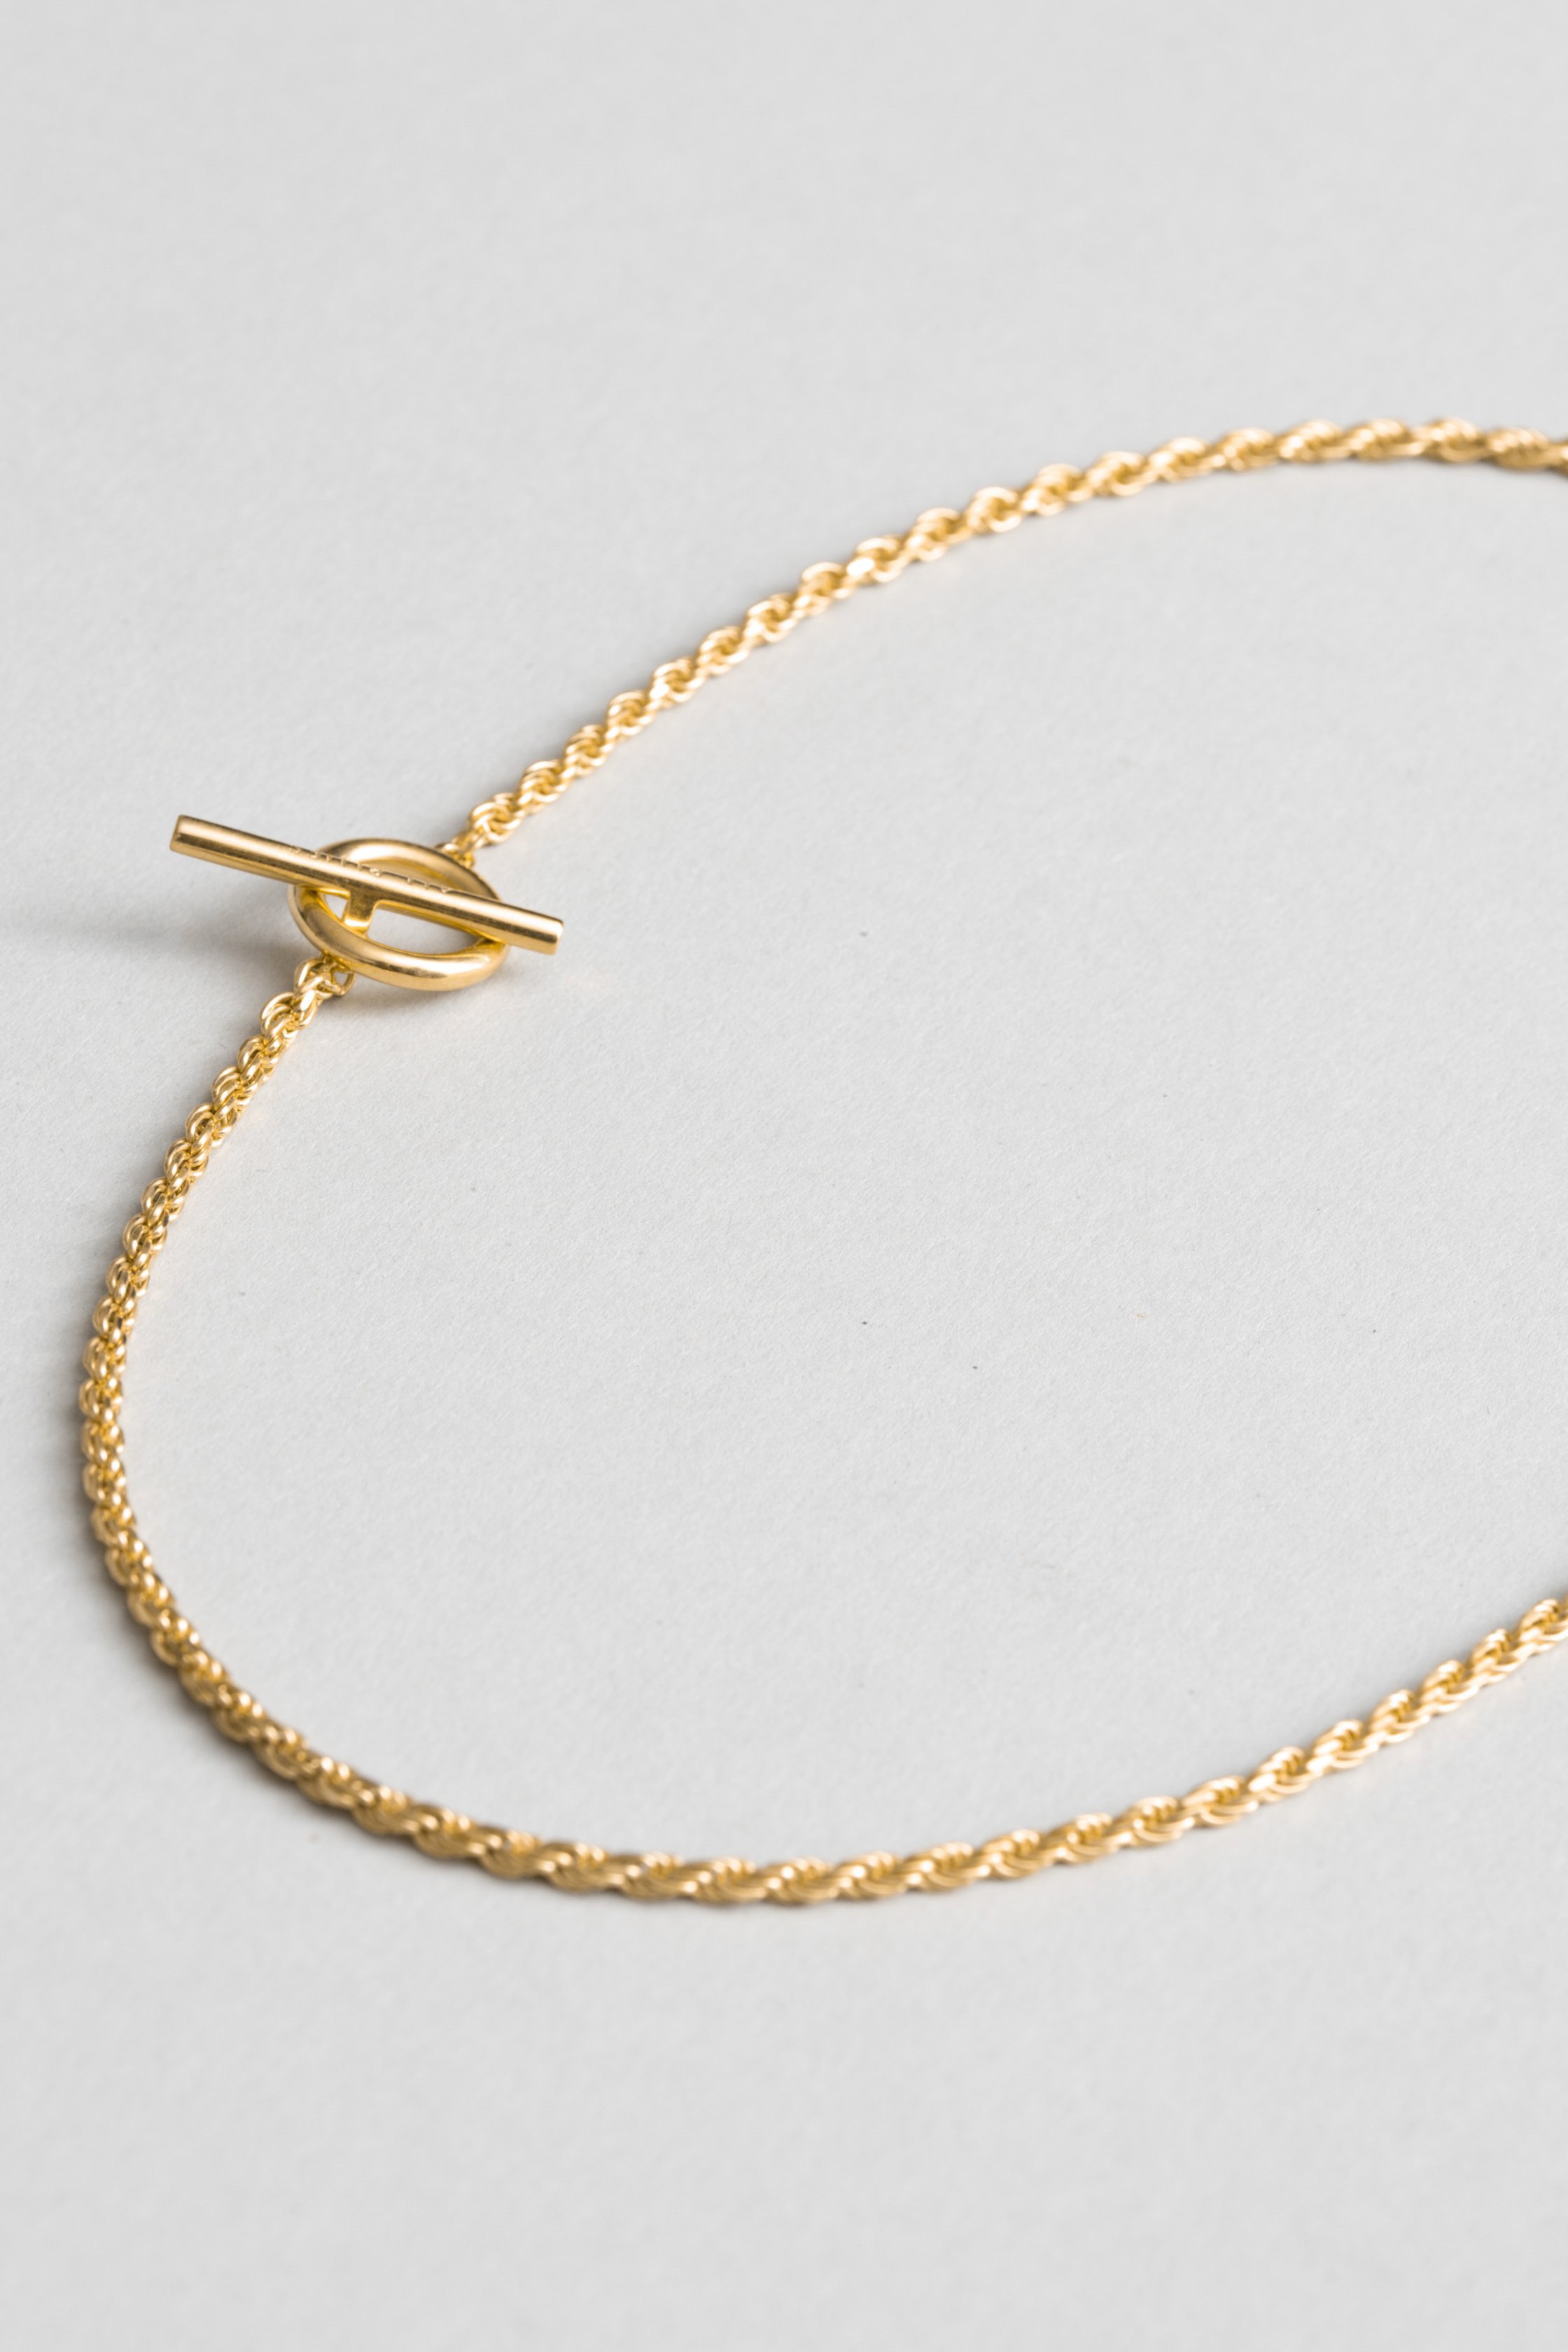 Rope necklace Polished gold 42cm 42CM